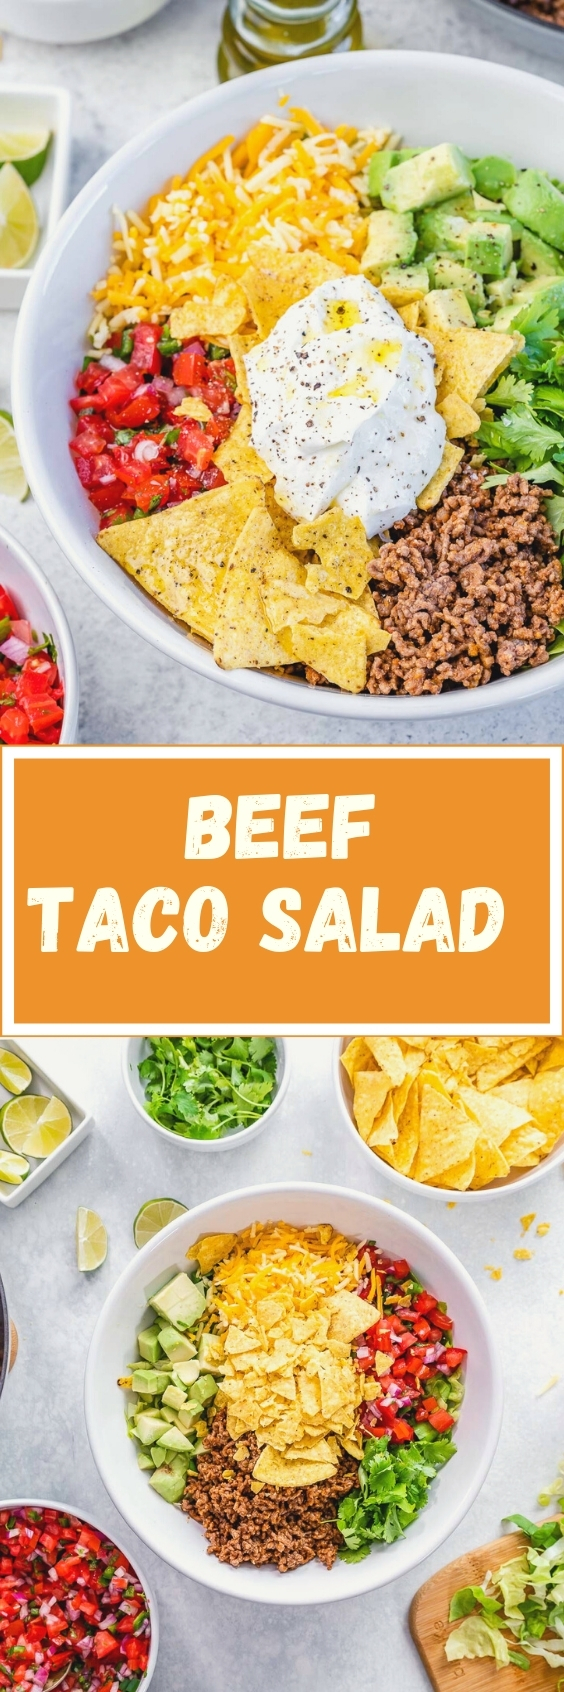 https://cleanfoodcrush.com/wp-content/uploads/2021/09/CFCs-Taco-Salad-Everyone-Loves-recipe.jpg